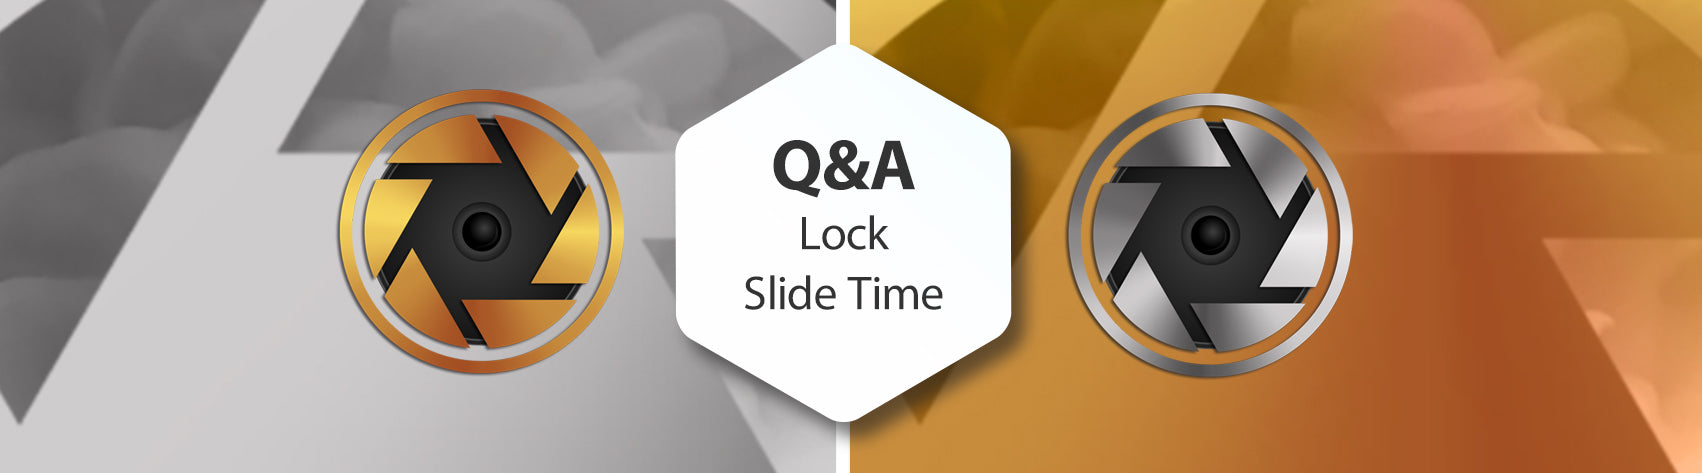 Q&A - Lock Slide Time